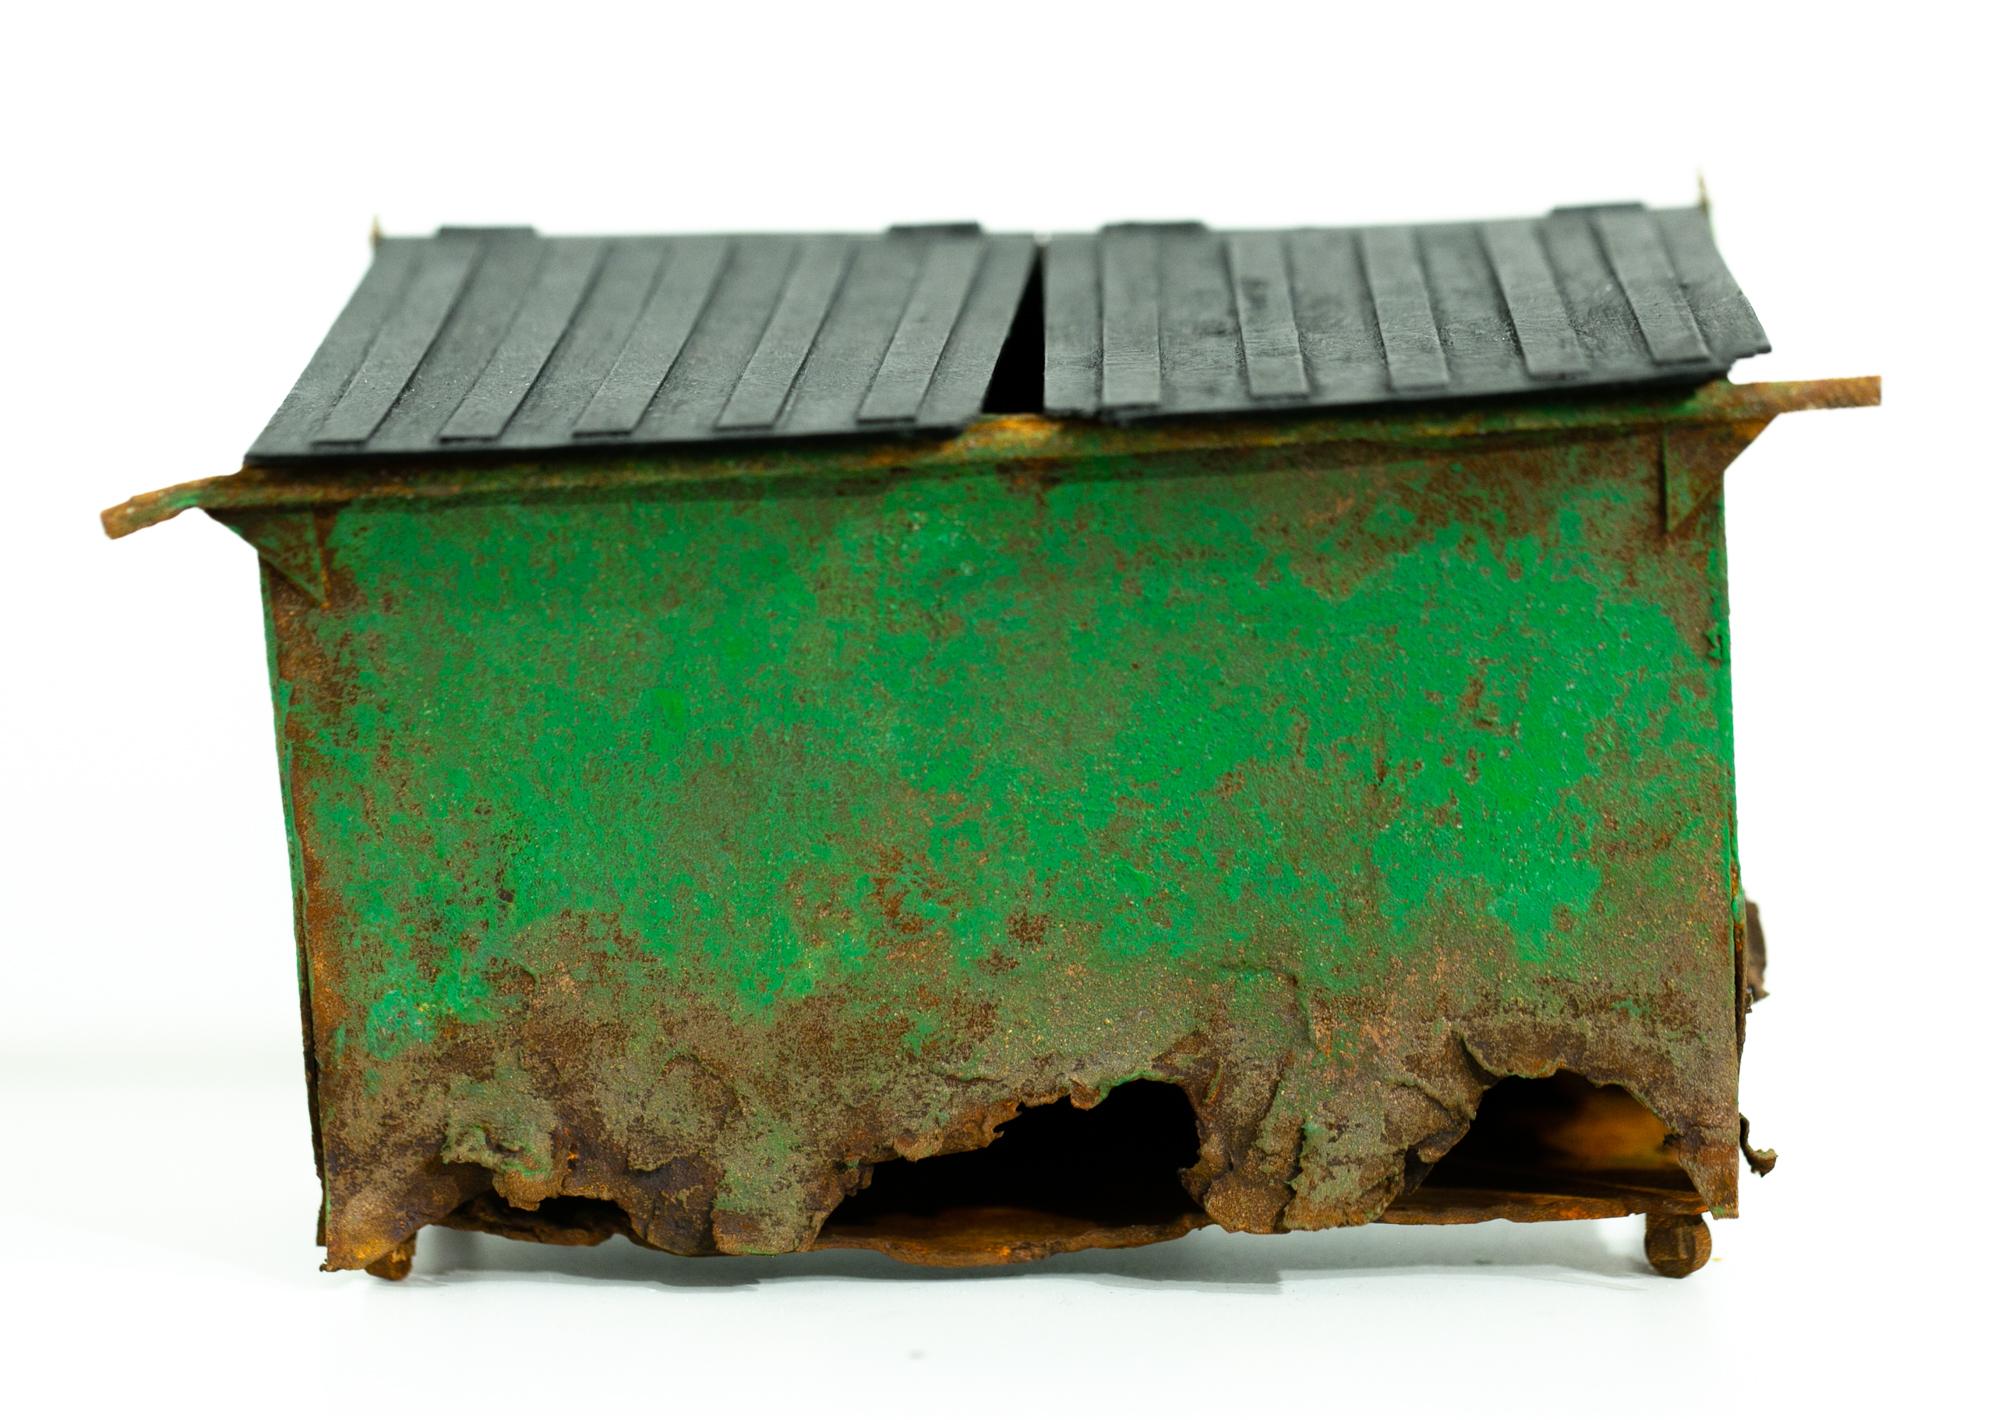 Drew Leshko Figurative Sculpture - "Green Dumpster", Miniature paper sculpture